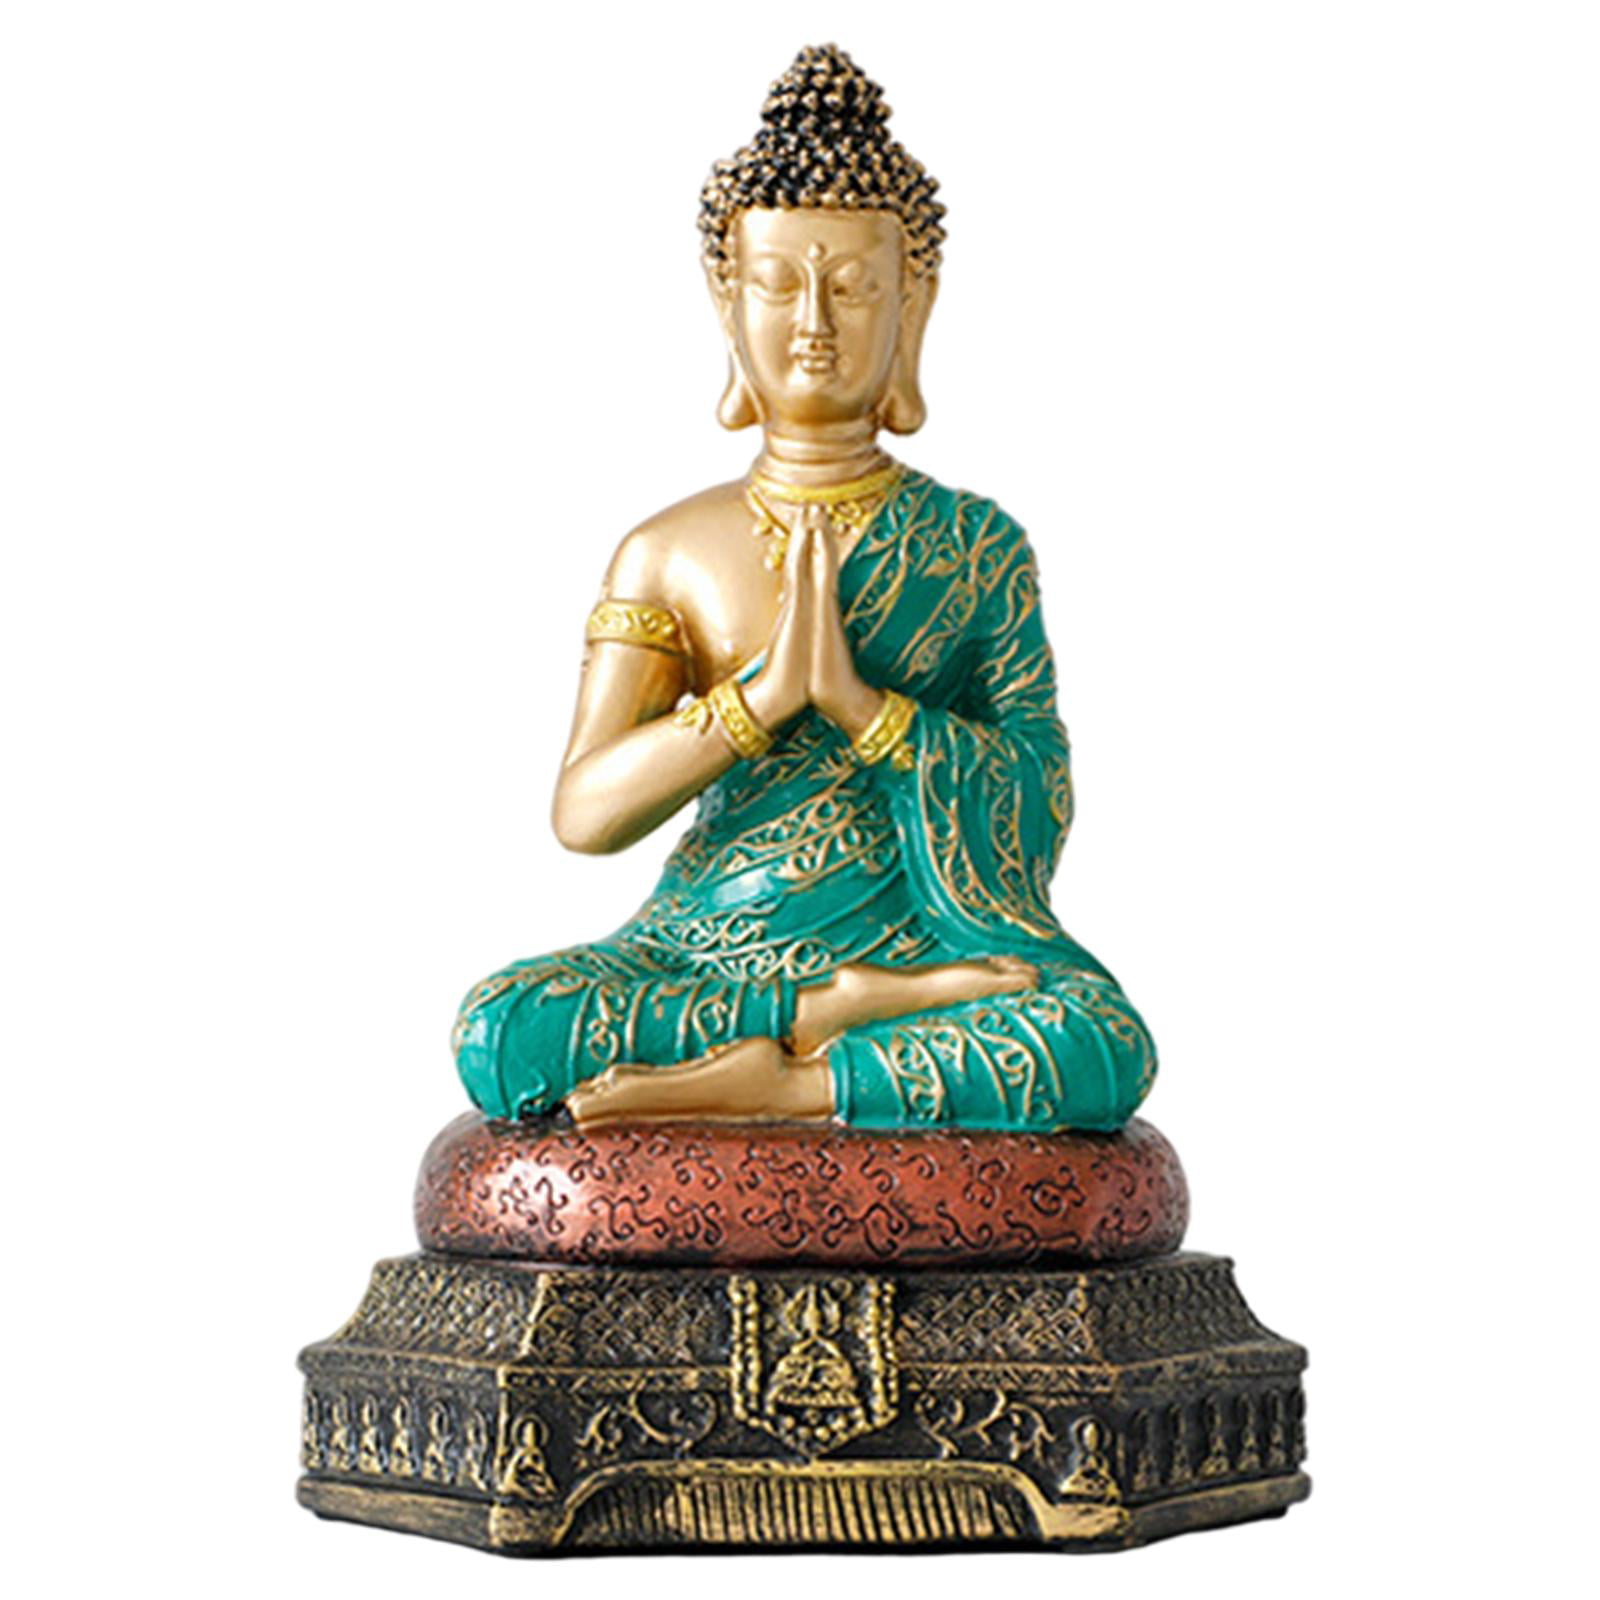 Sitting Buddha Statue Small Figurine Fengshui Home Office Docor Mini Ornament 